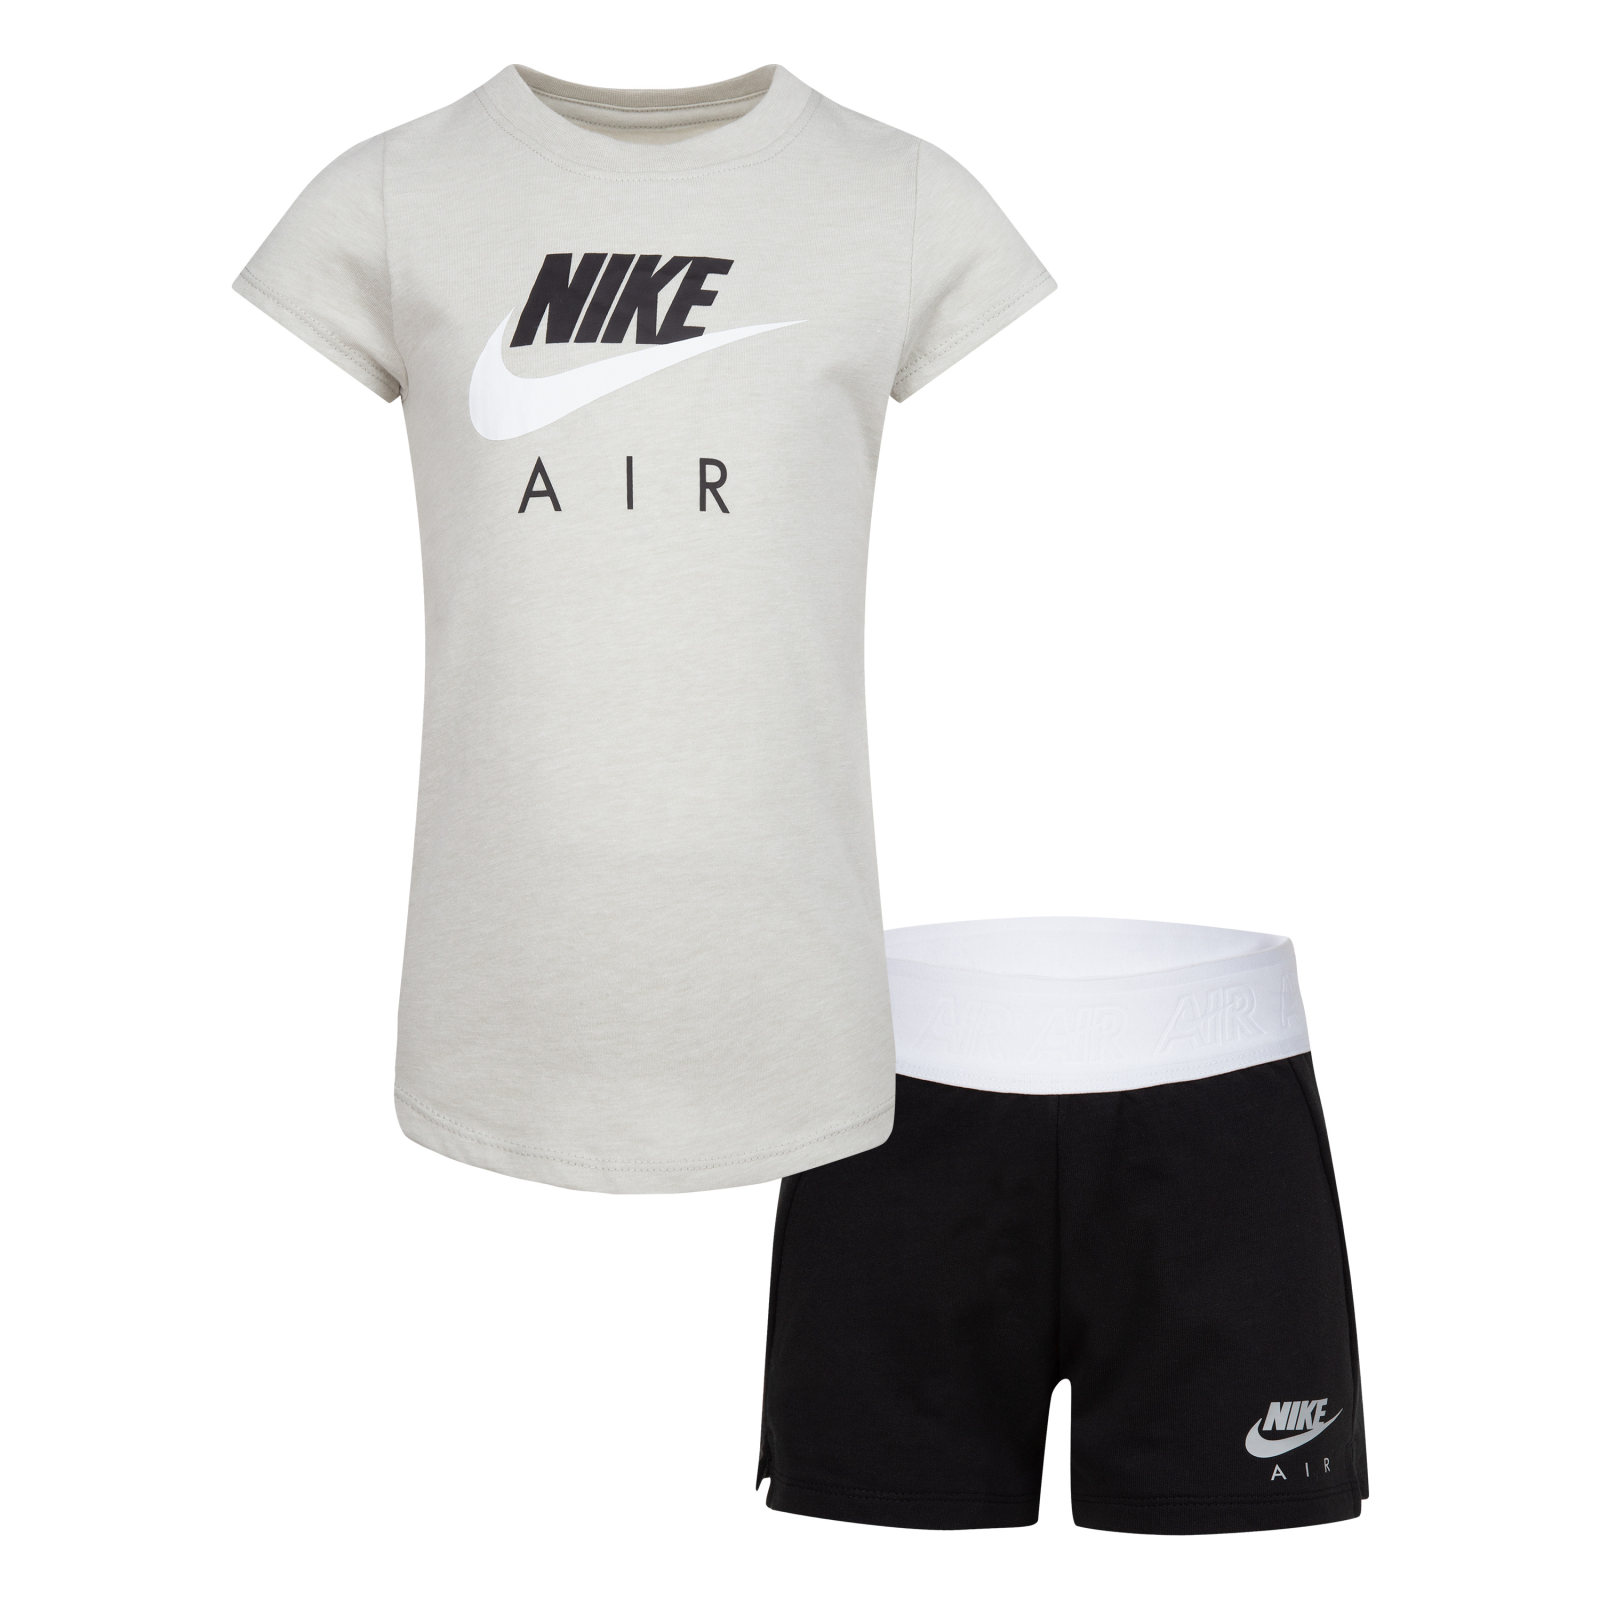 Levně Nike air short set 110-116 cm